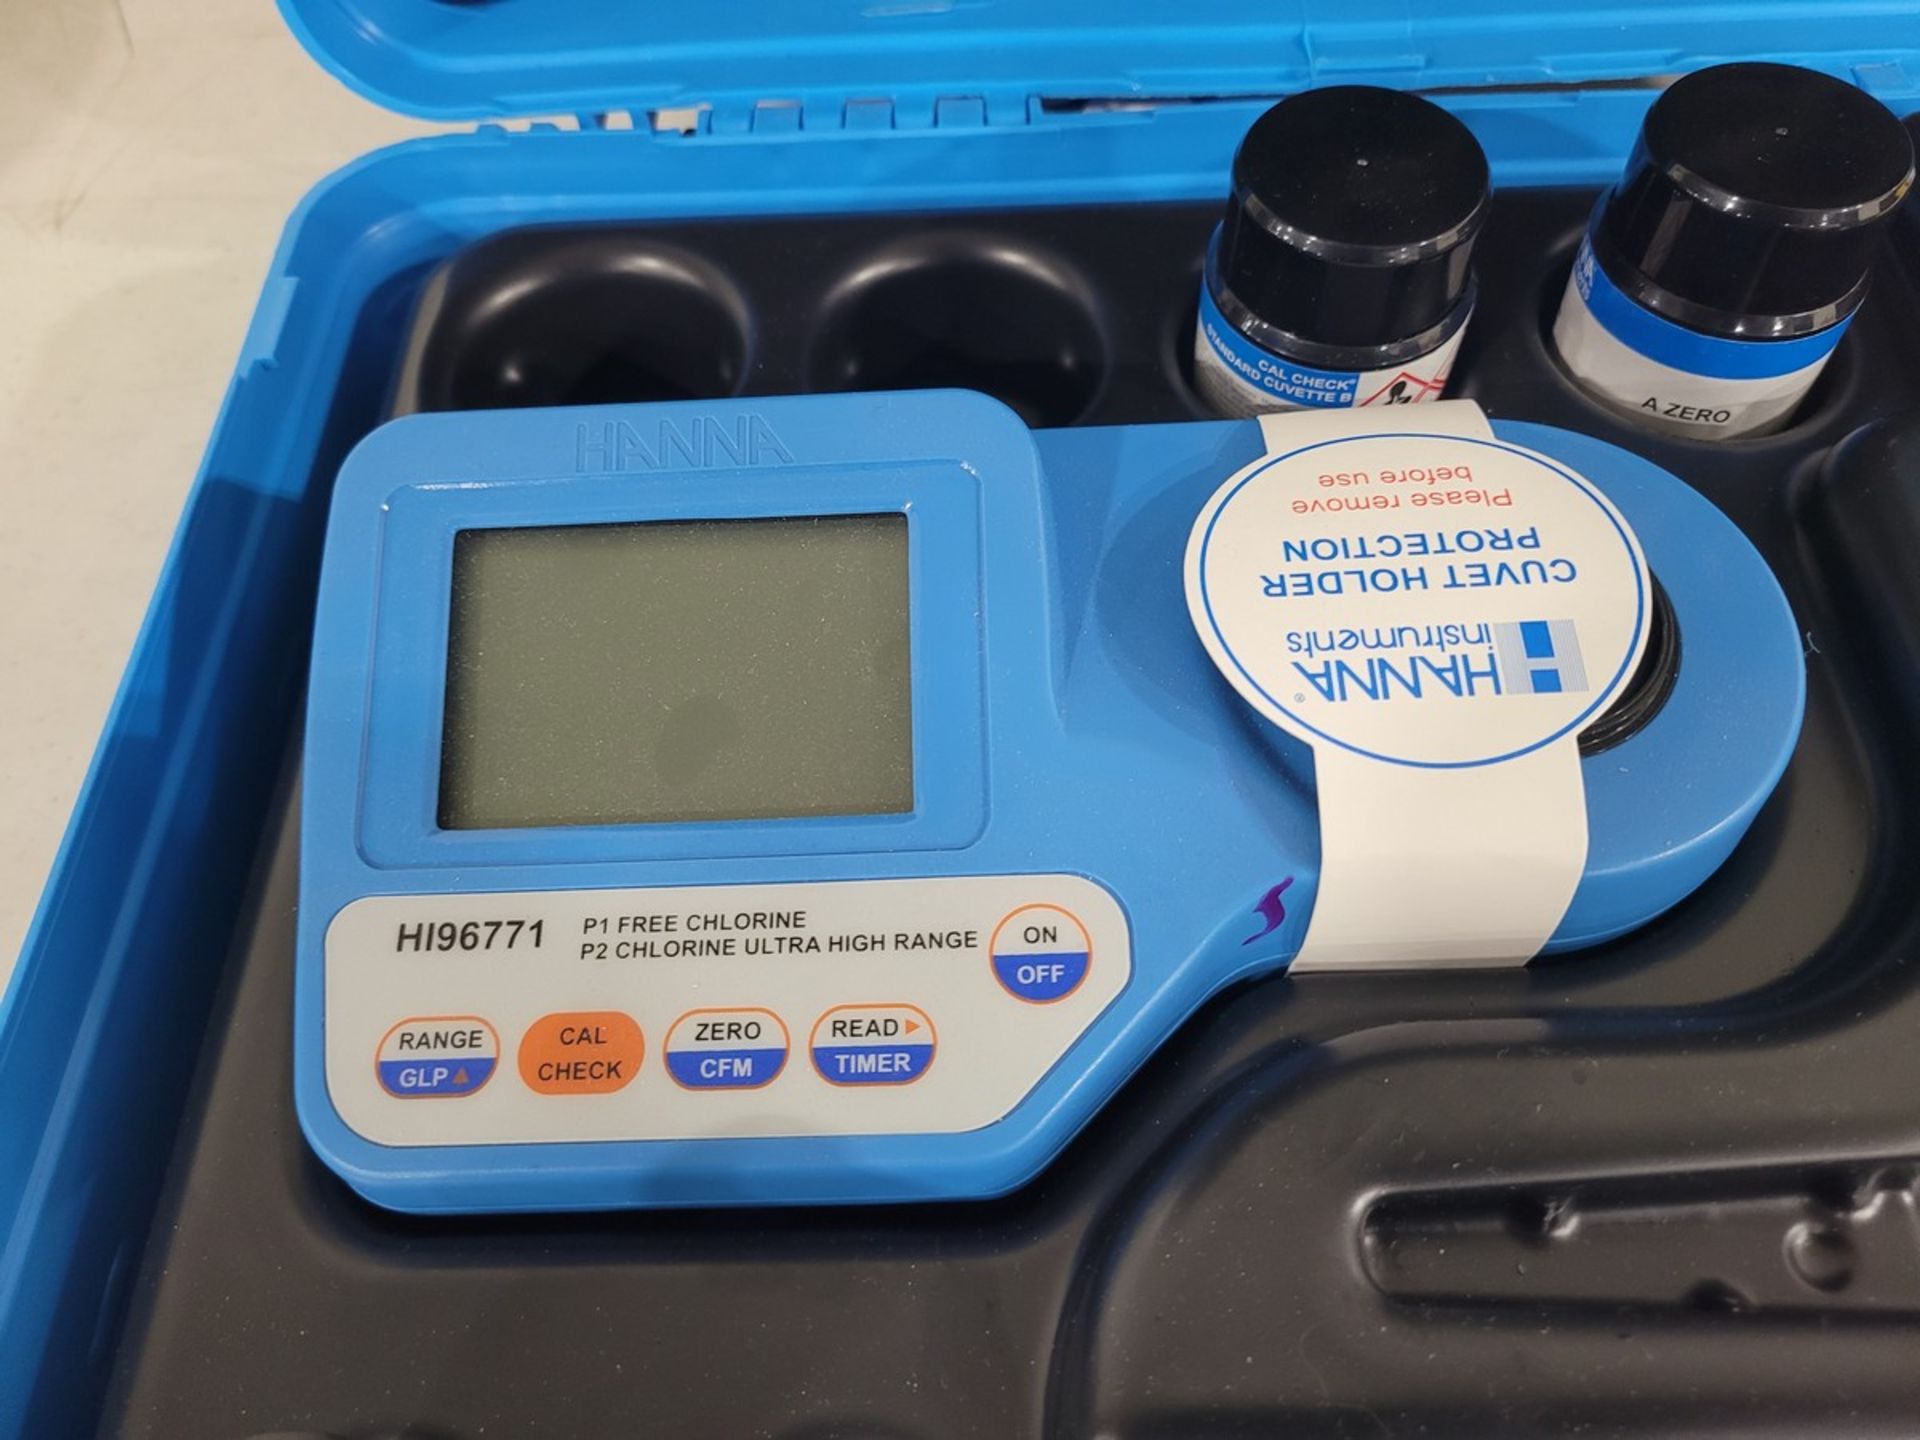 Hanna HI96771 Free Chlorine & Chlorine UHR Portable Photometer - Image 2 of 2